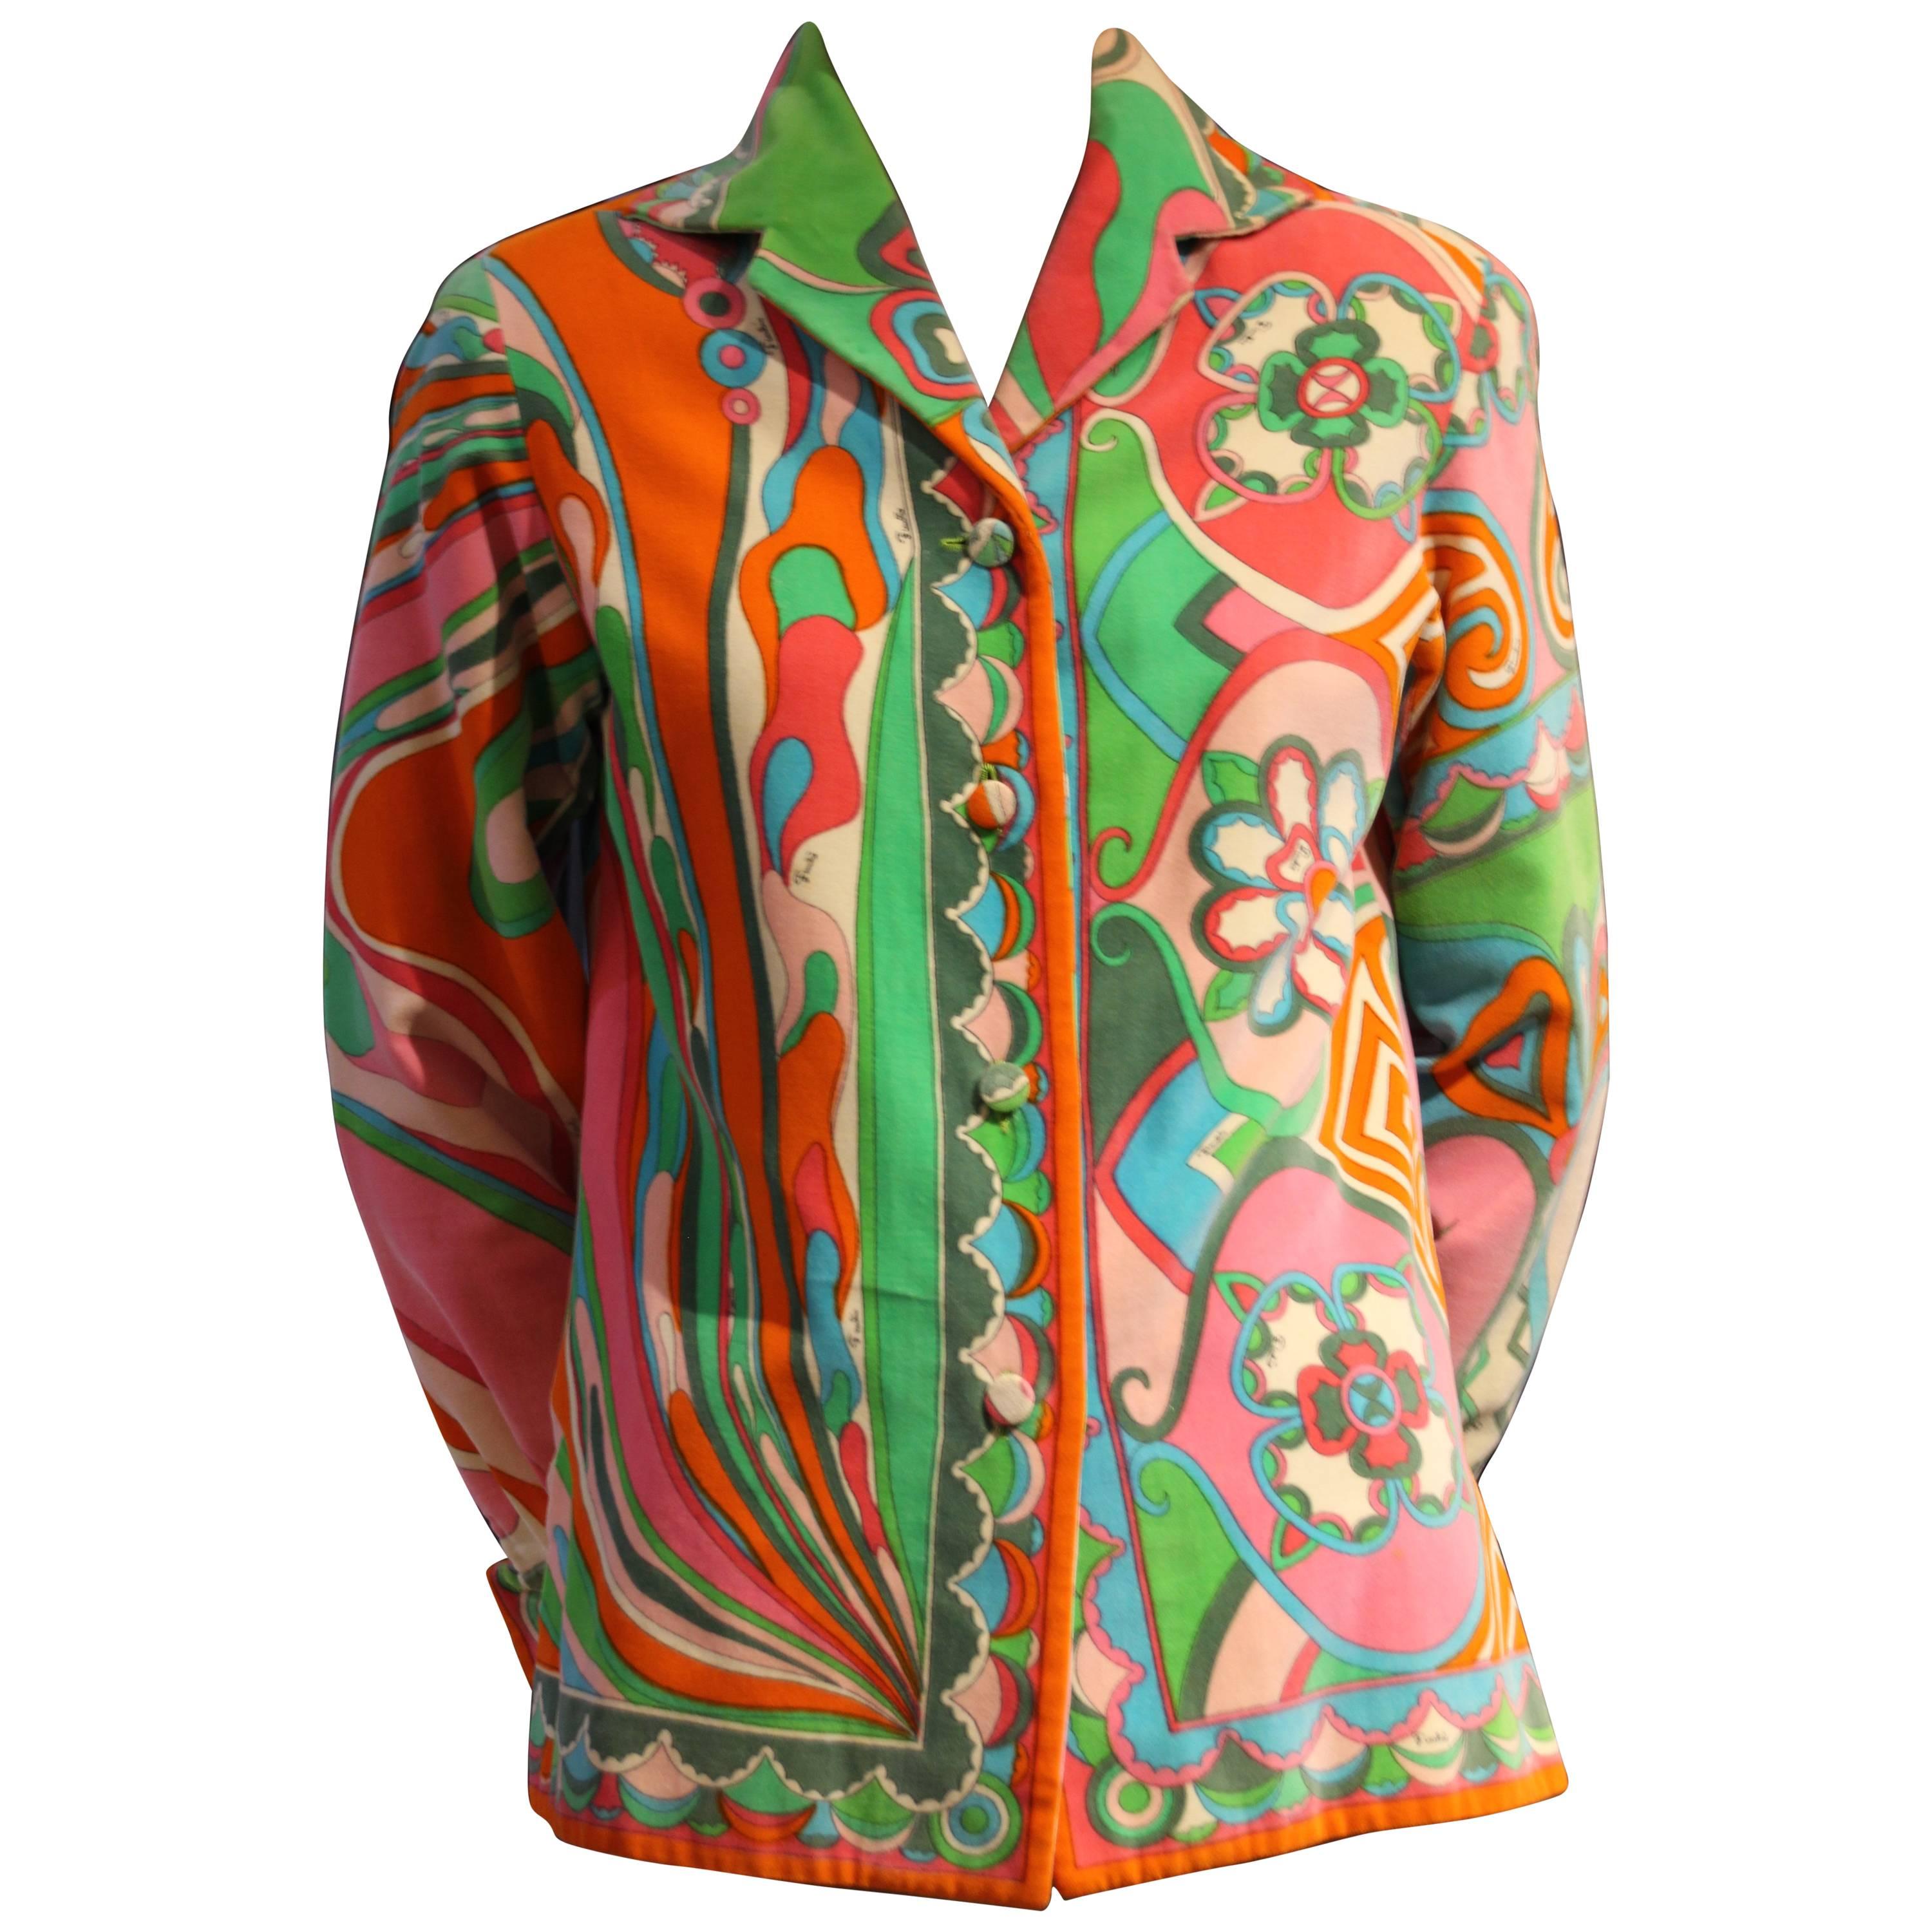 1960s Emilio Pucci Cotton Velveteen Jacket in Delicious Sorbet Palette